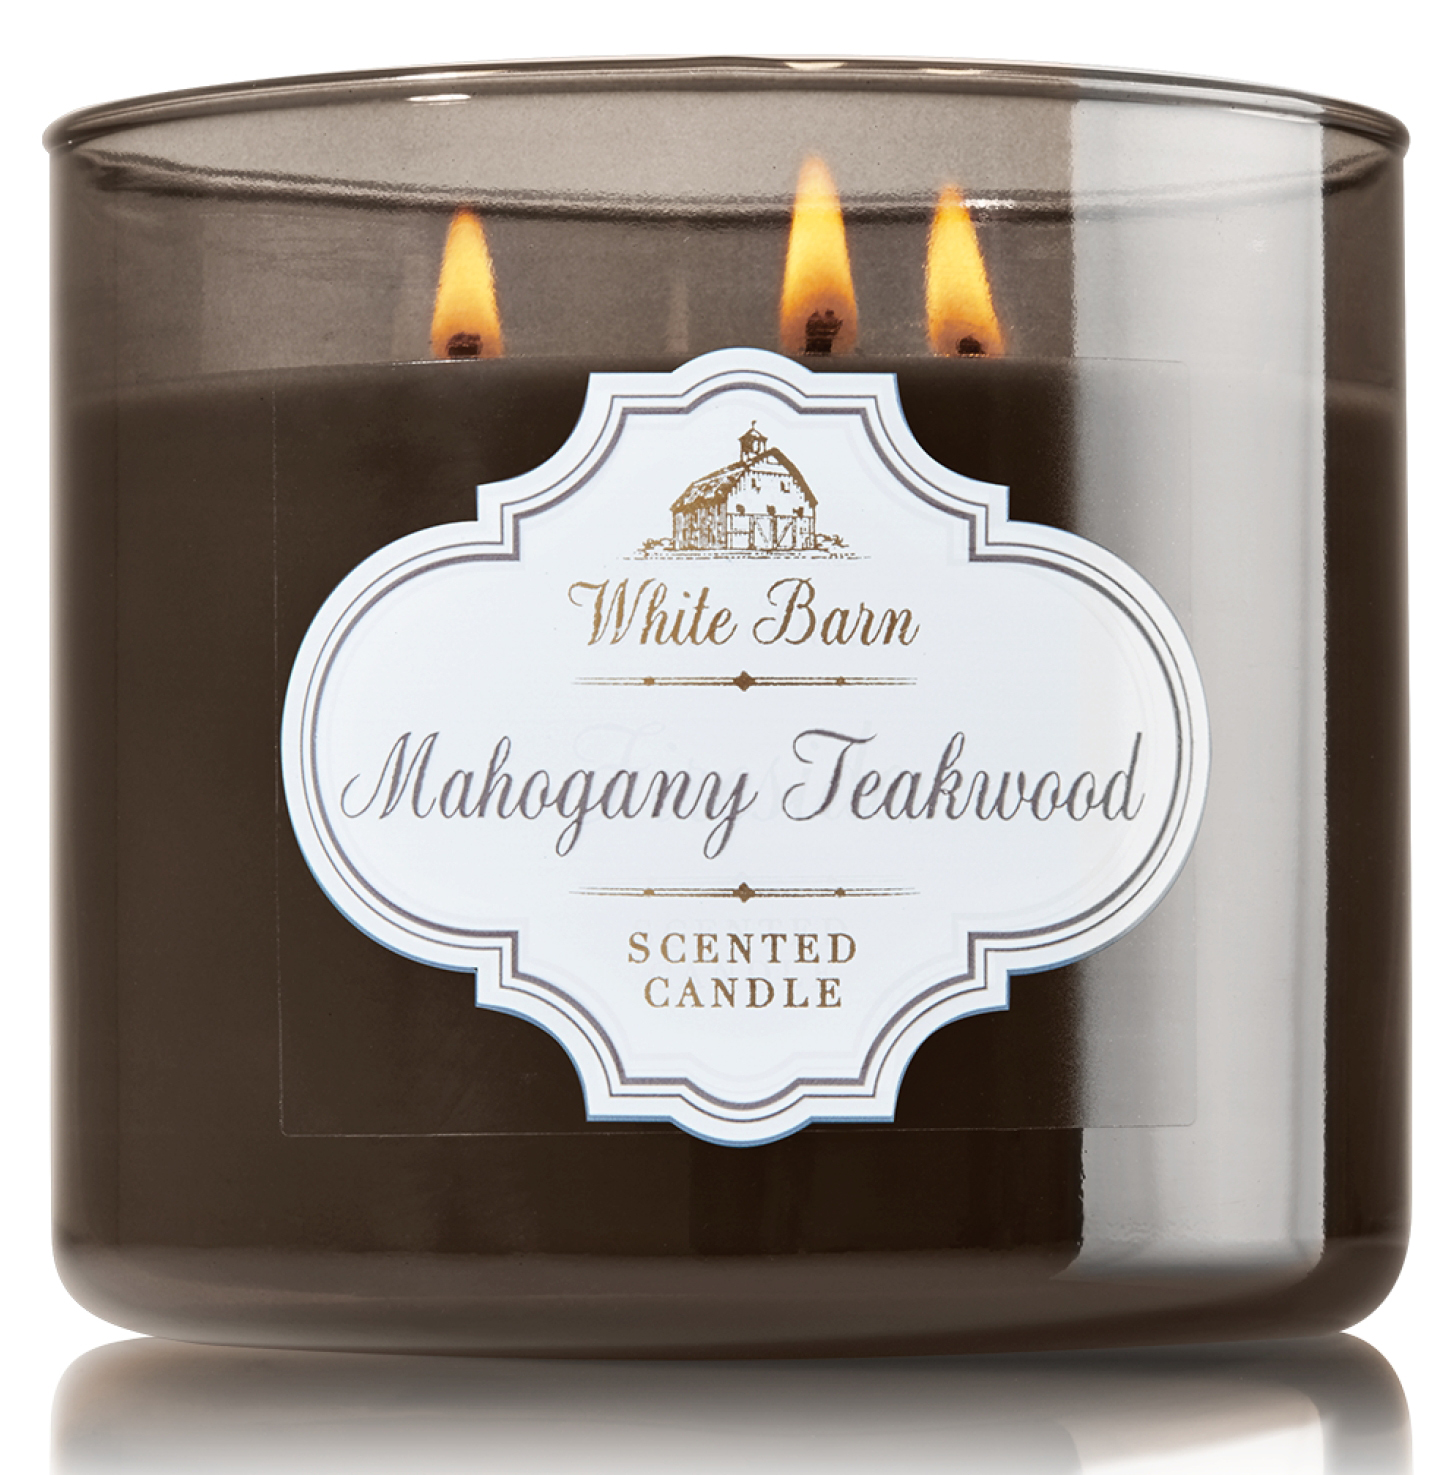 Bath & Body Works’ Mahogany Teakwood Candle